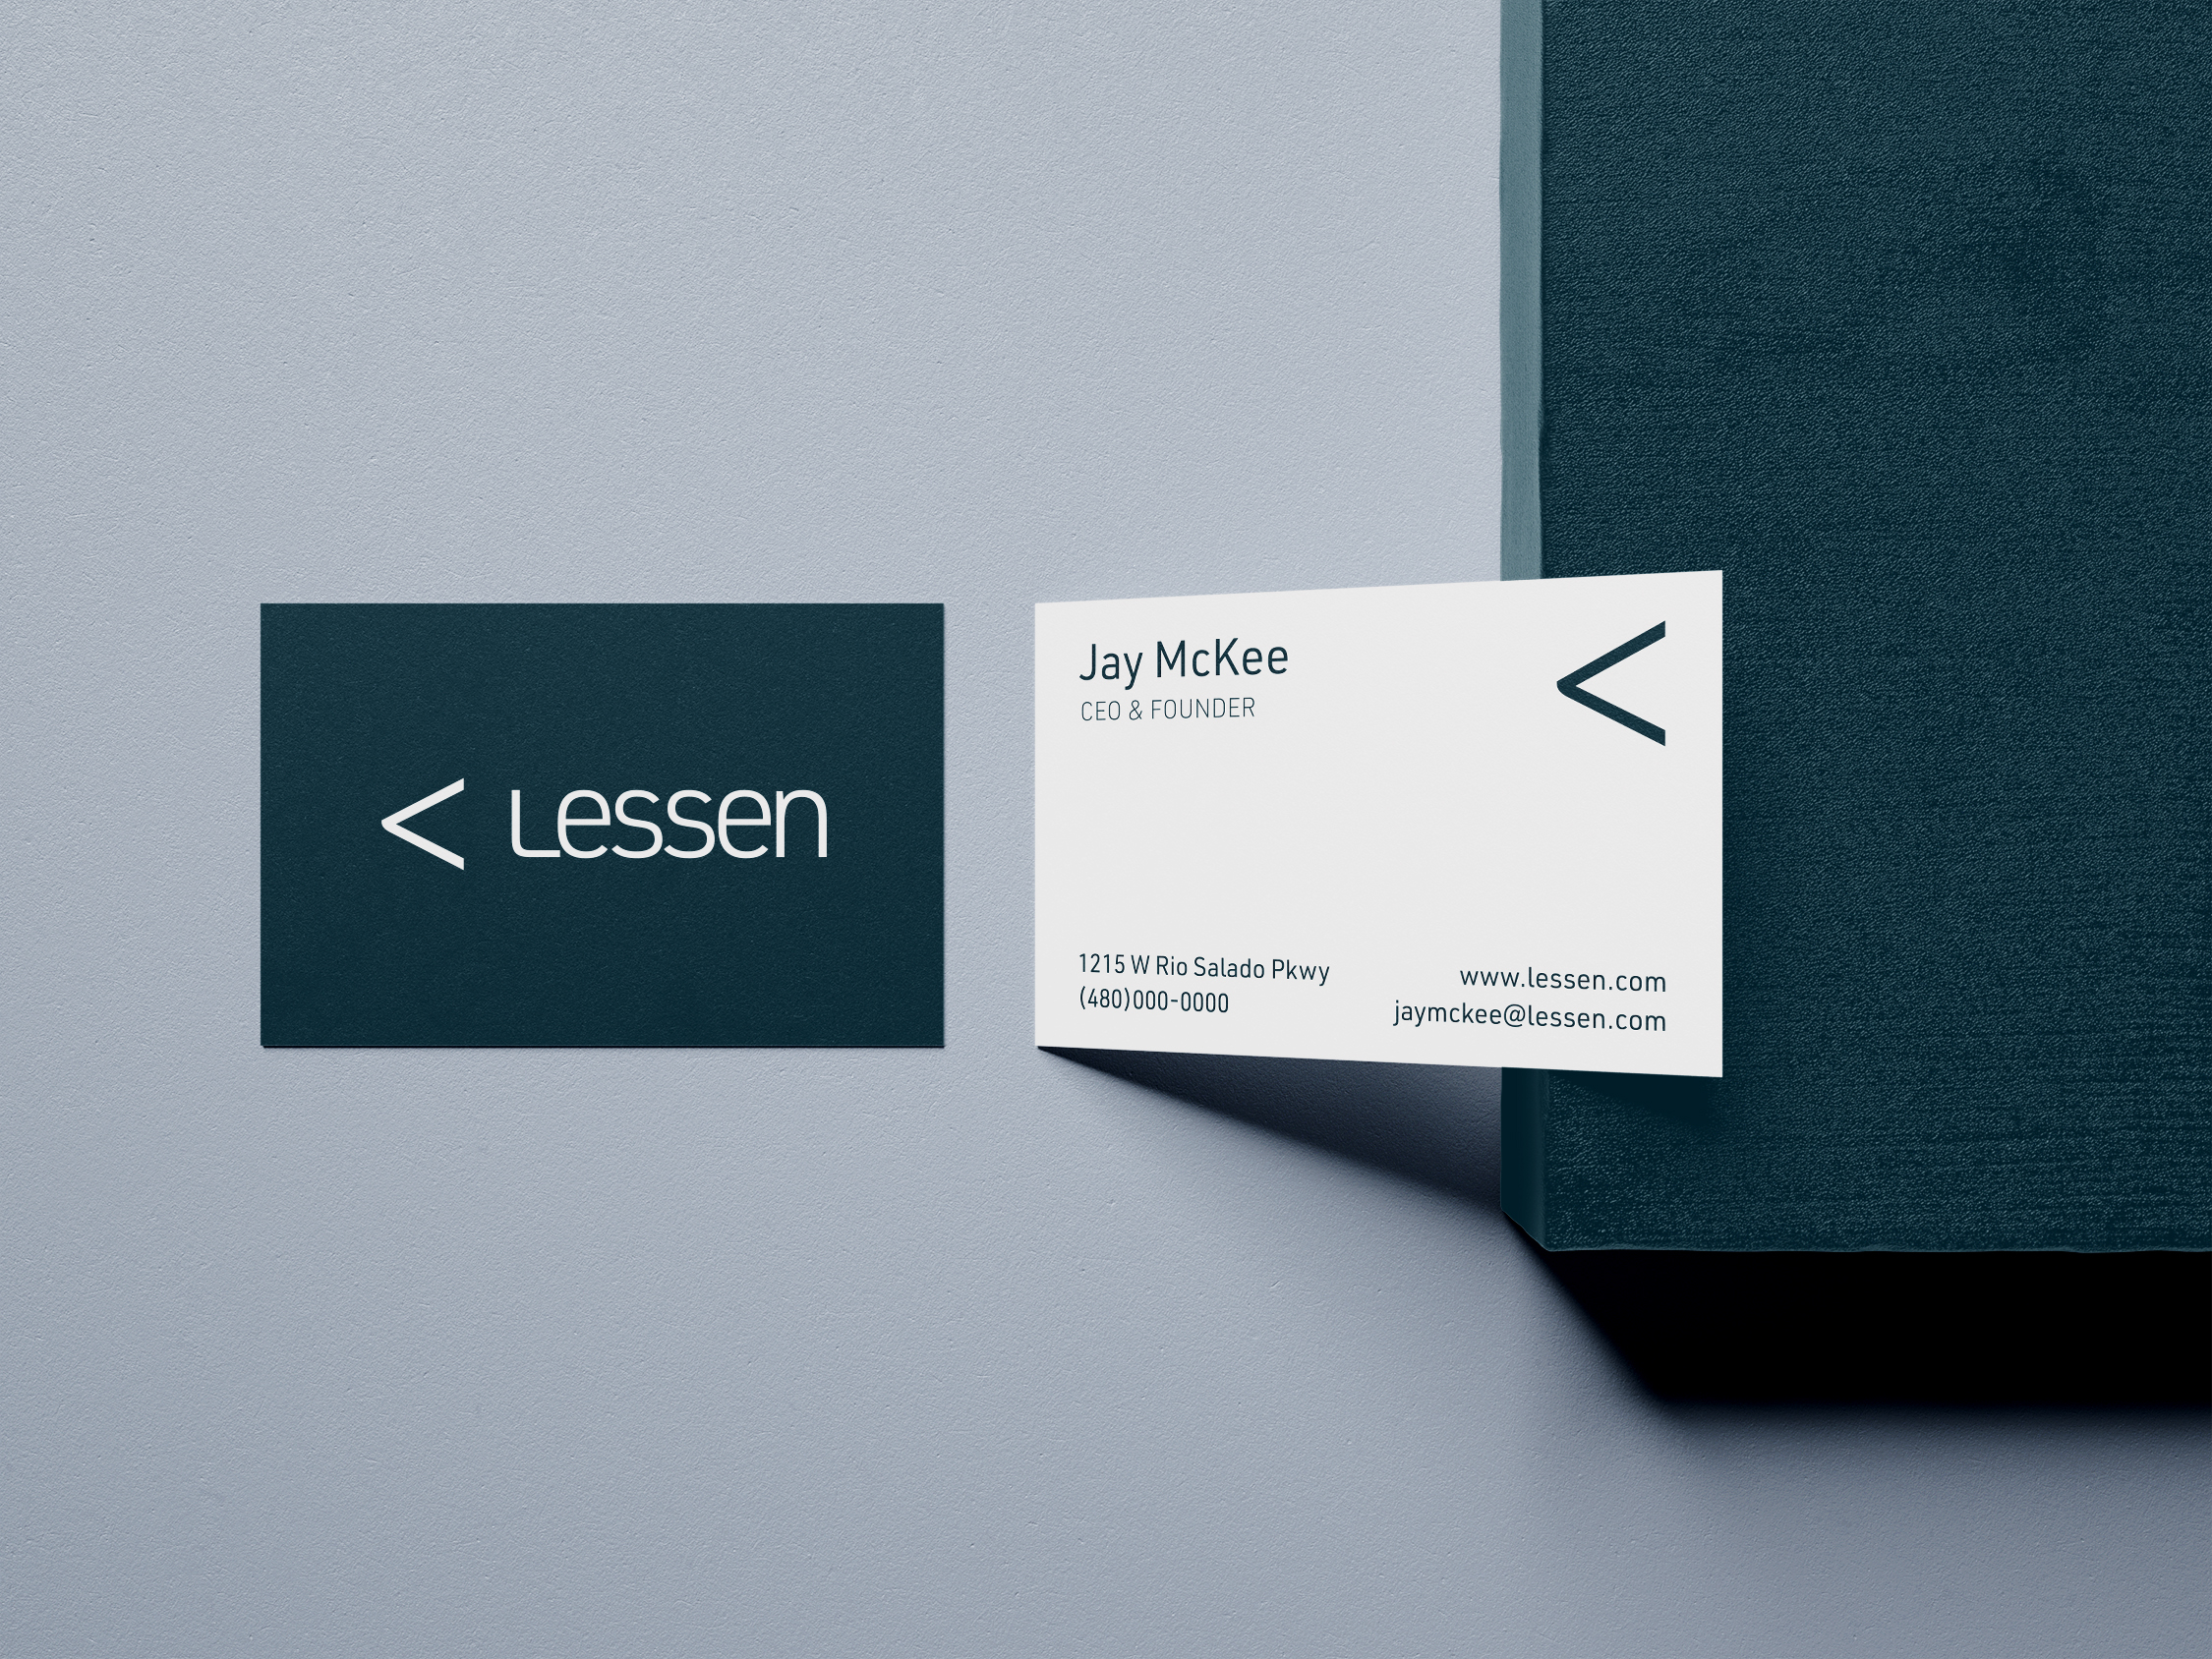 Lessen-Less-Business-Card-Mock